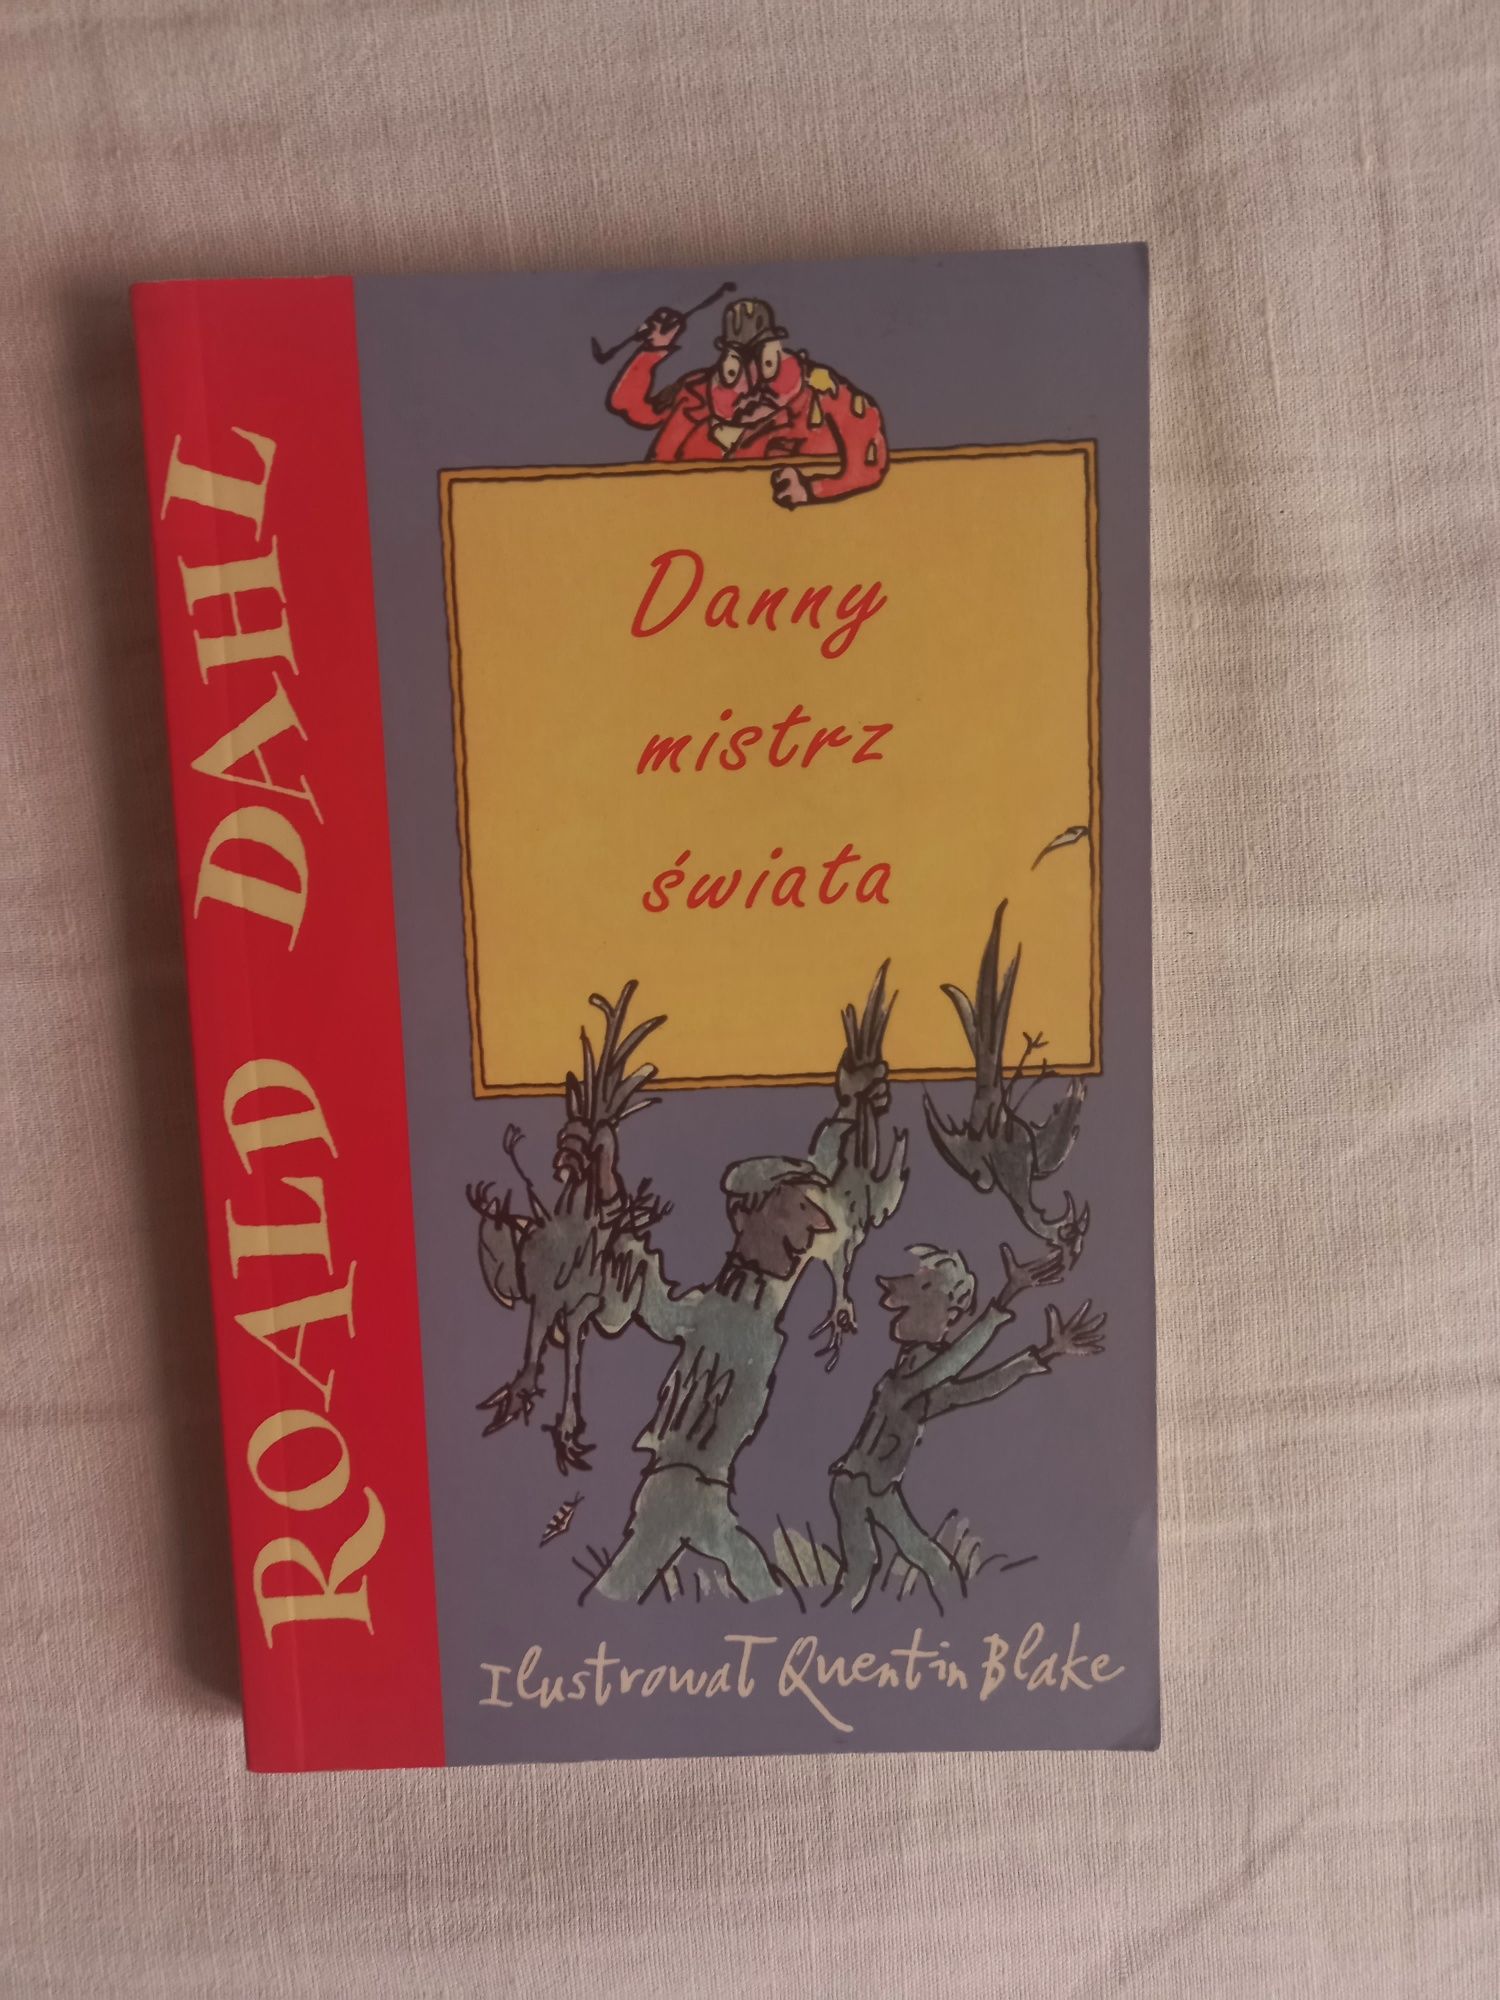 Danny mistrz świata  Książka Roald Dahl